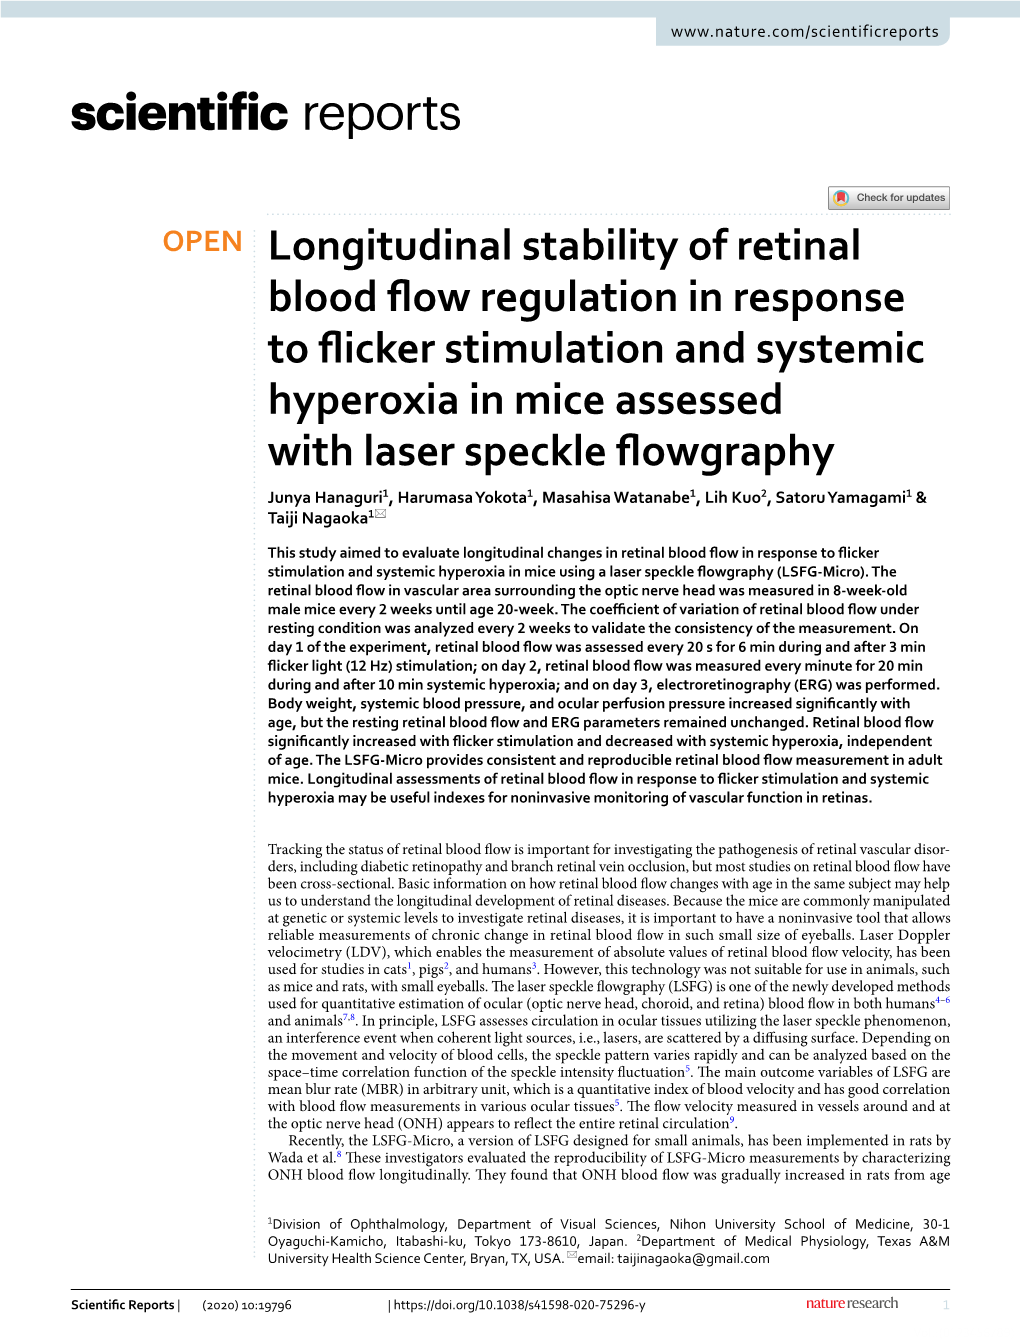 Longitudinal Stability of Retinal Blood Flow Regulation in Response to Flicker